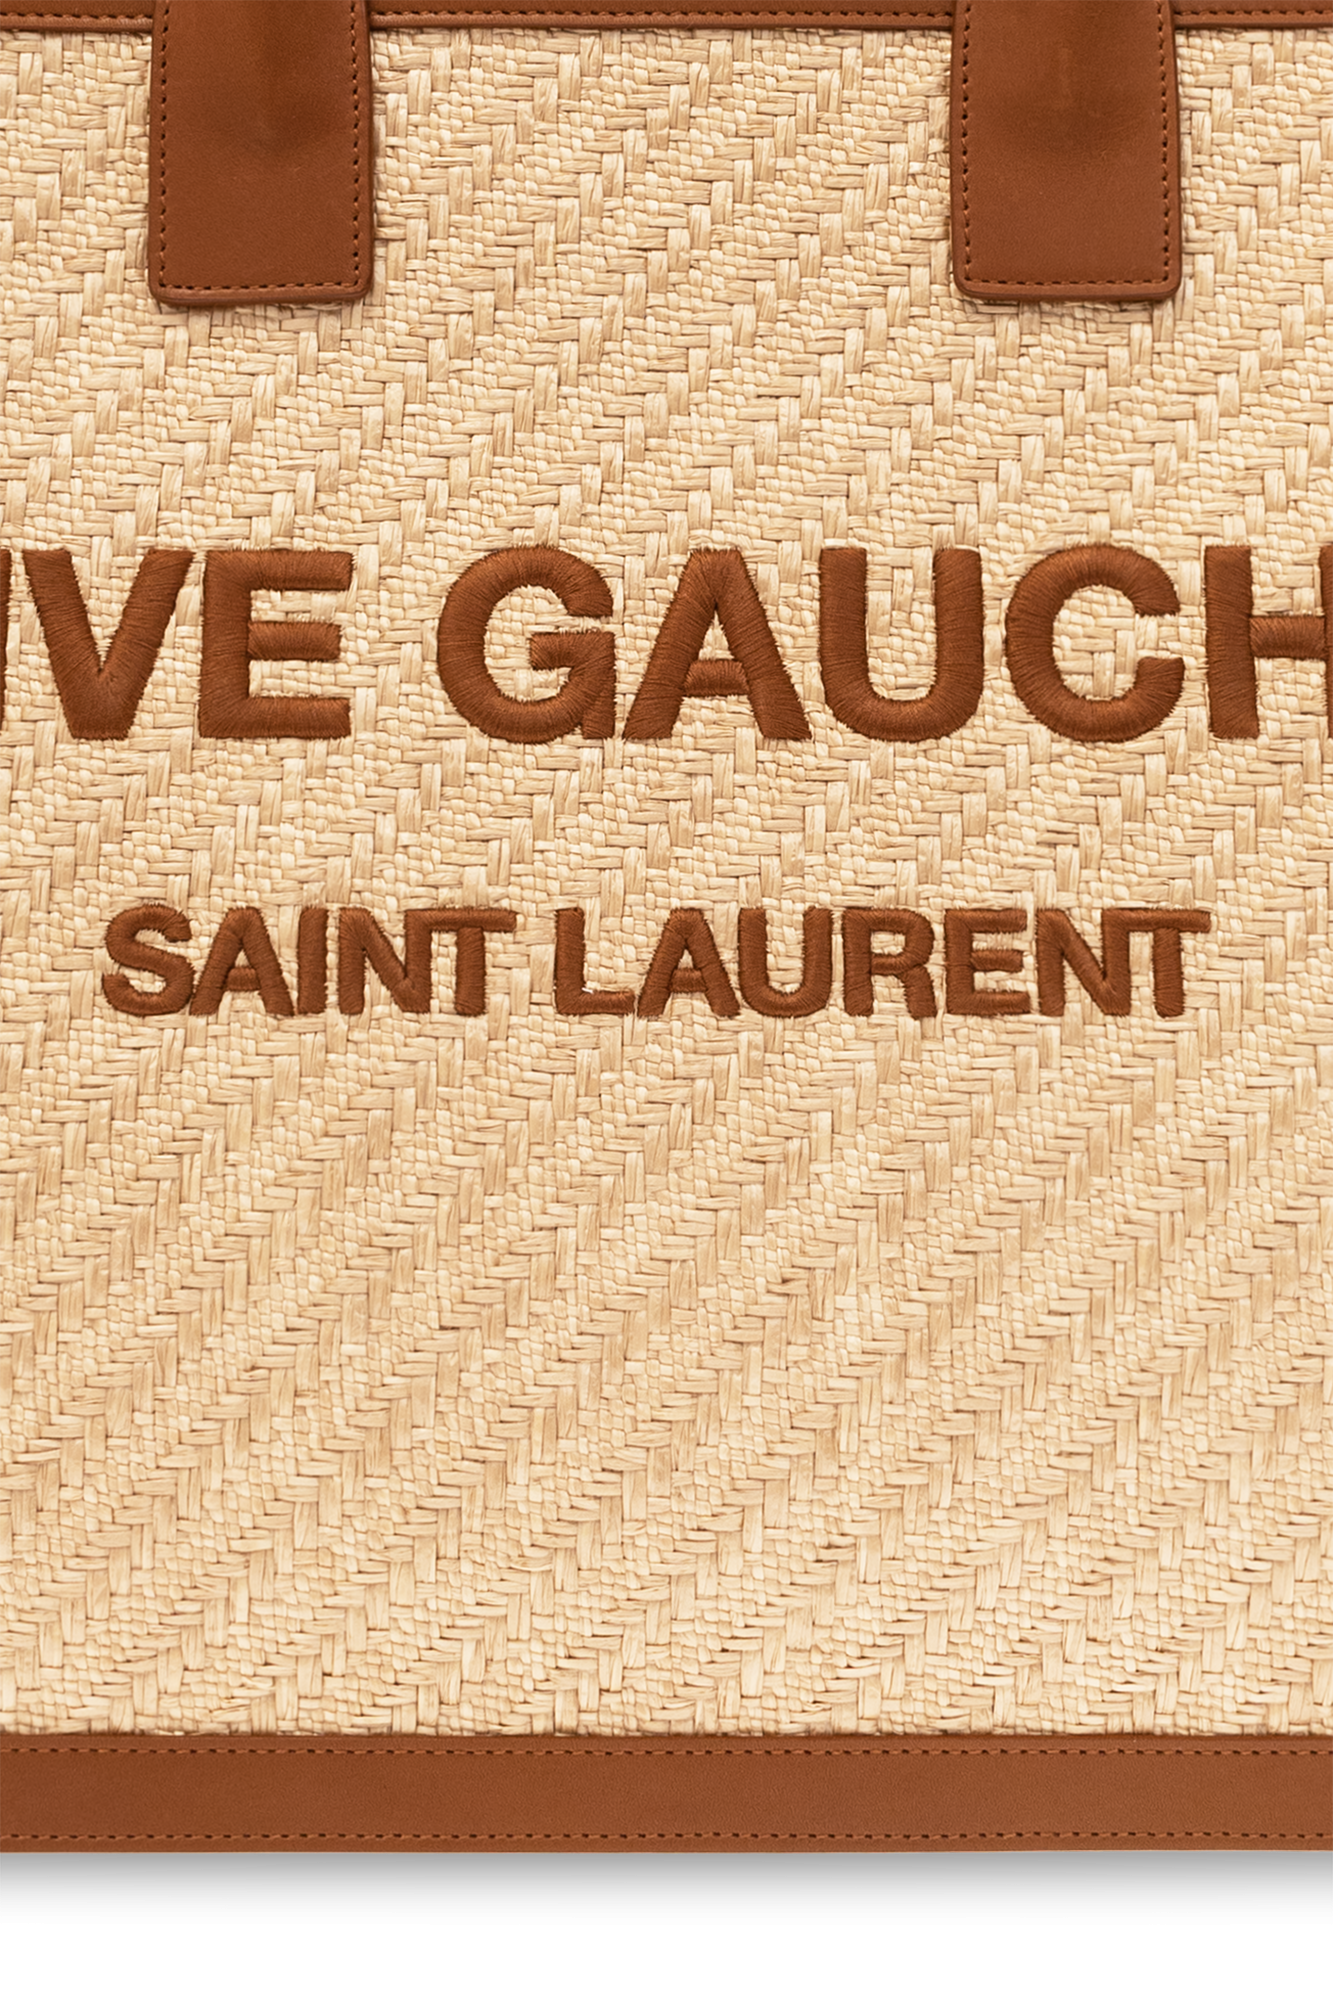 Saint Laurent Rive Gauche Shopper Bag